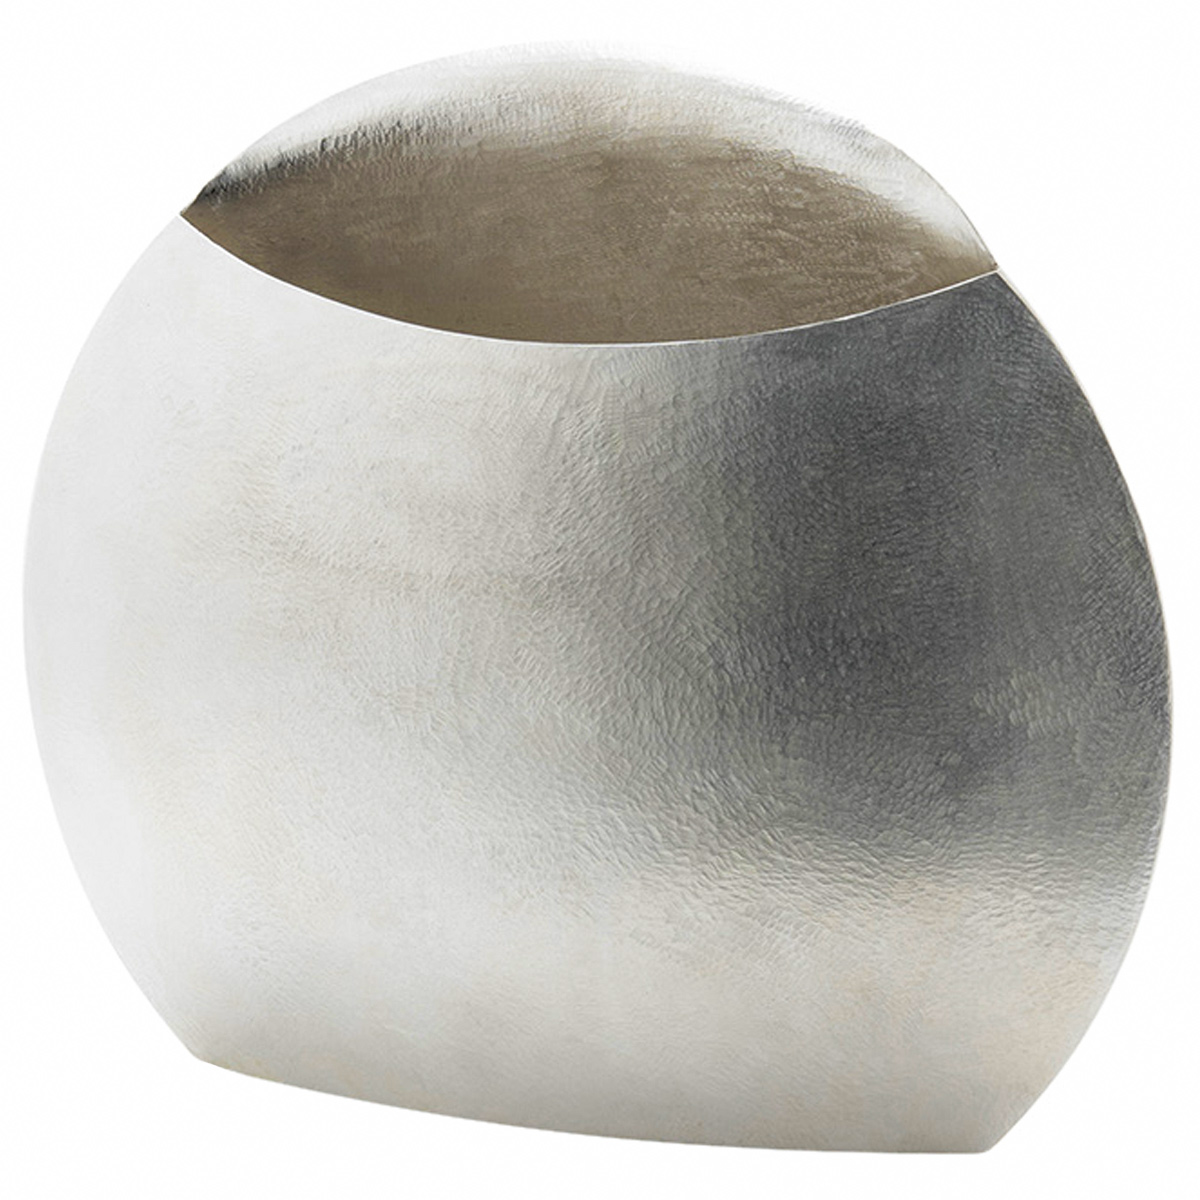 Vaso Round Shell by Mesa Design